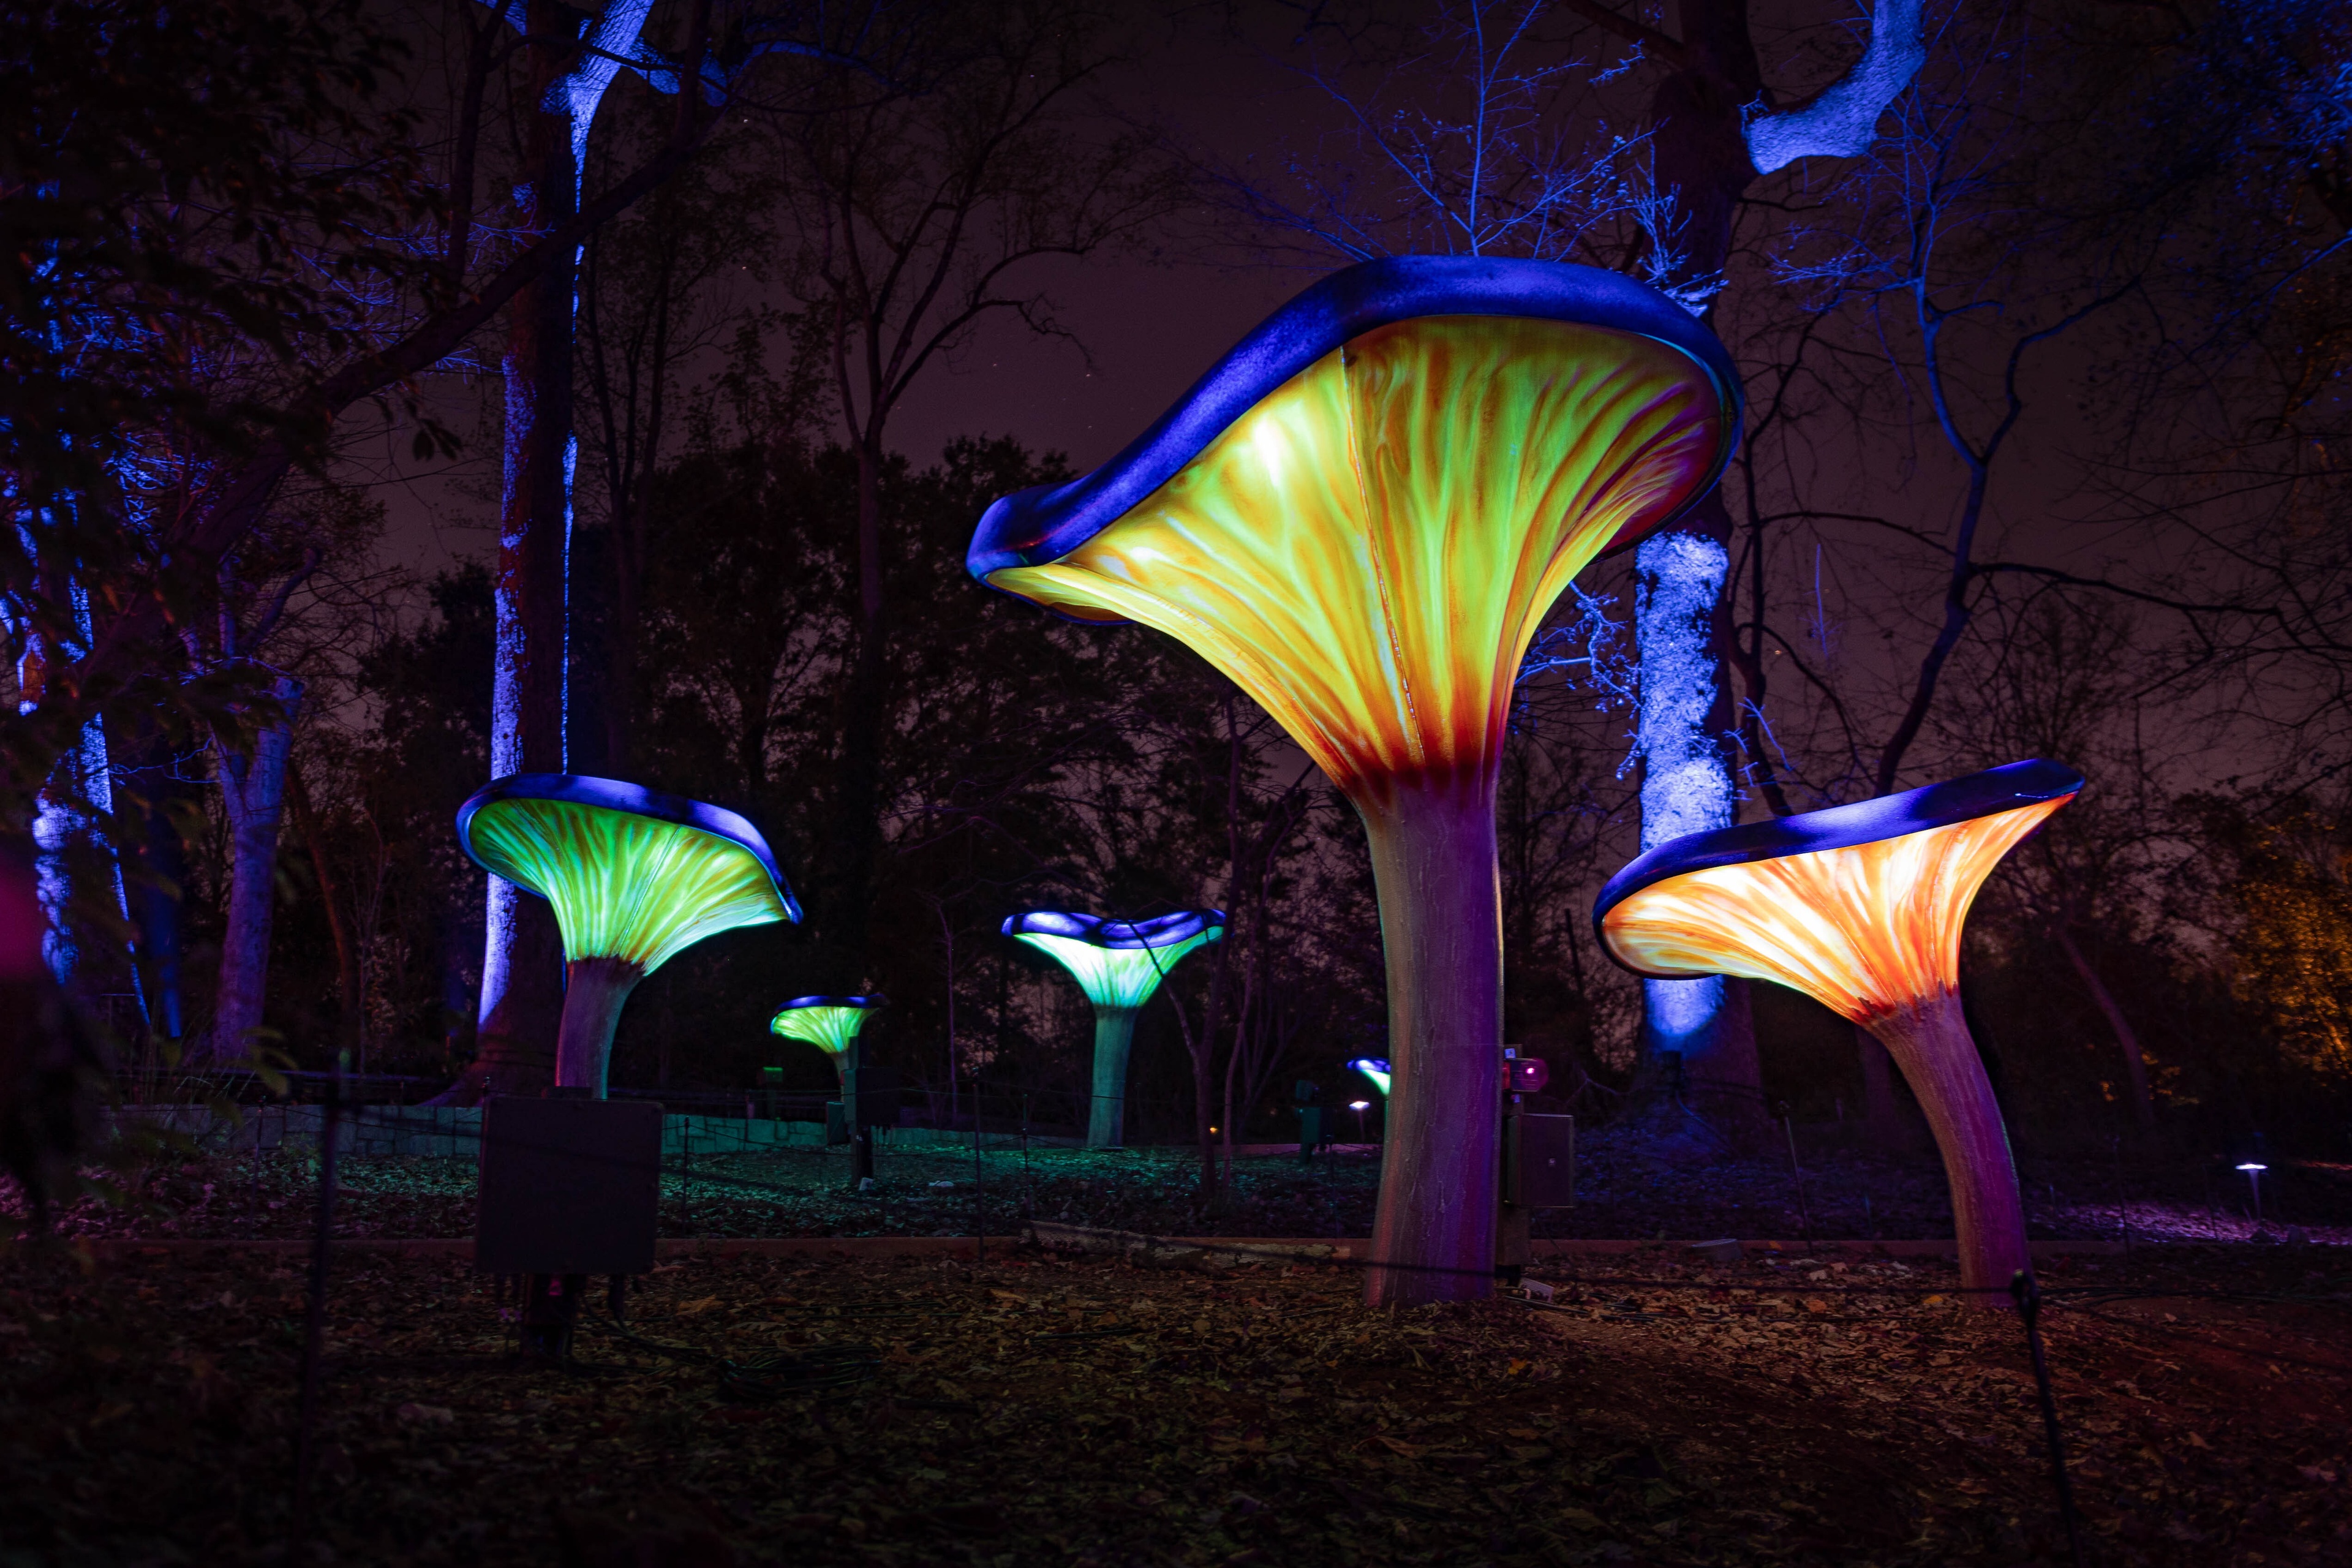 Colorful mushroom sculptures at night.